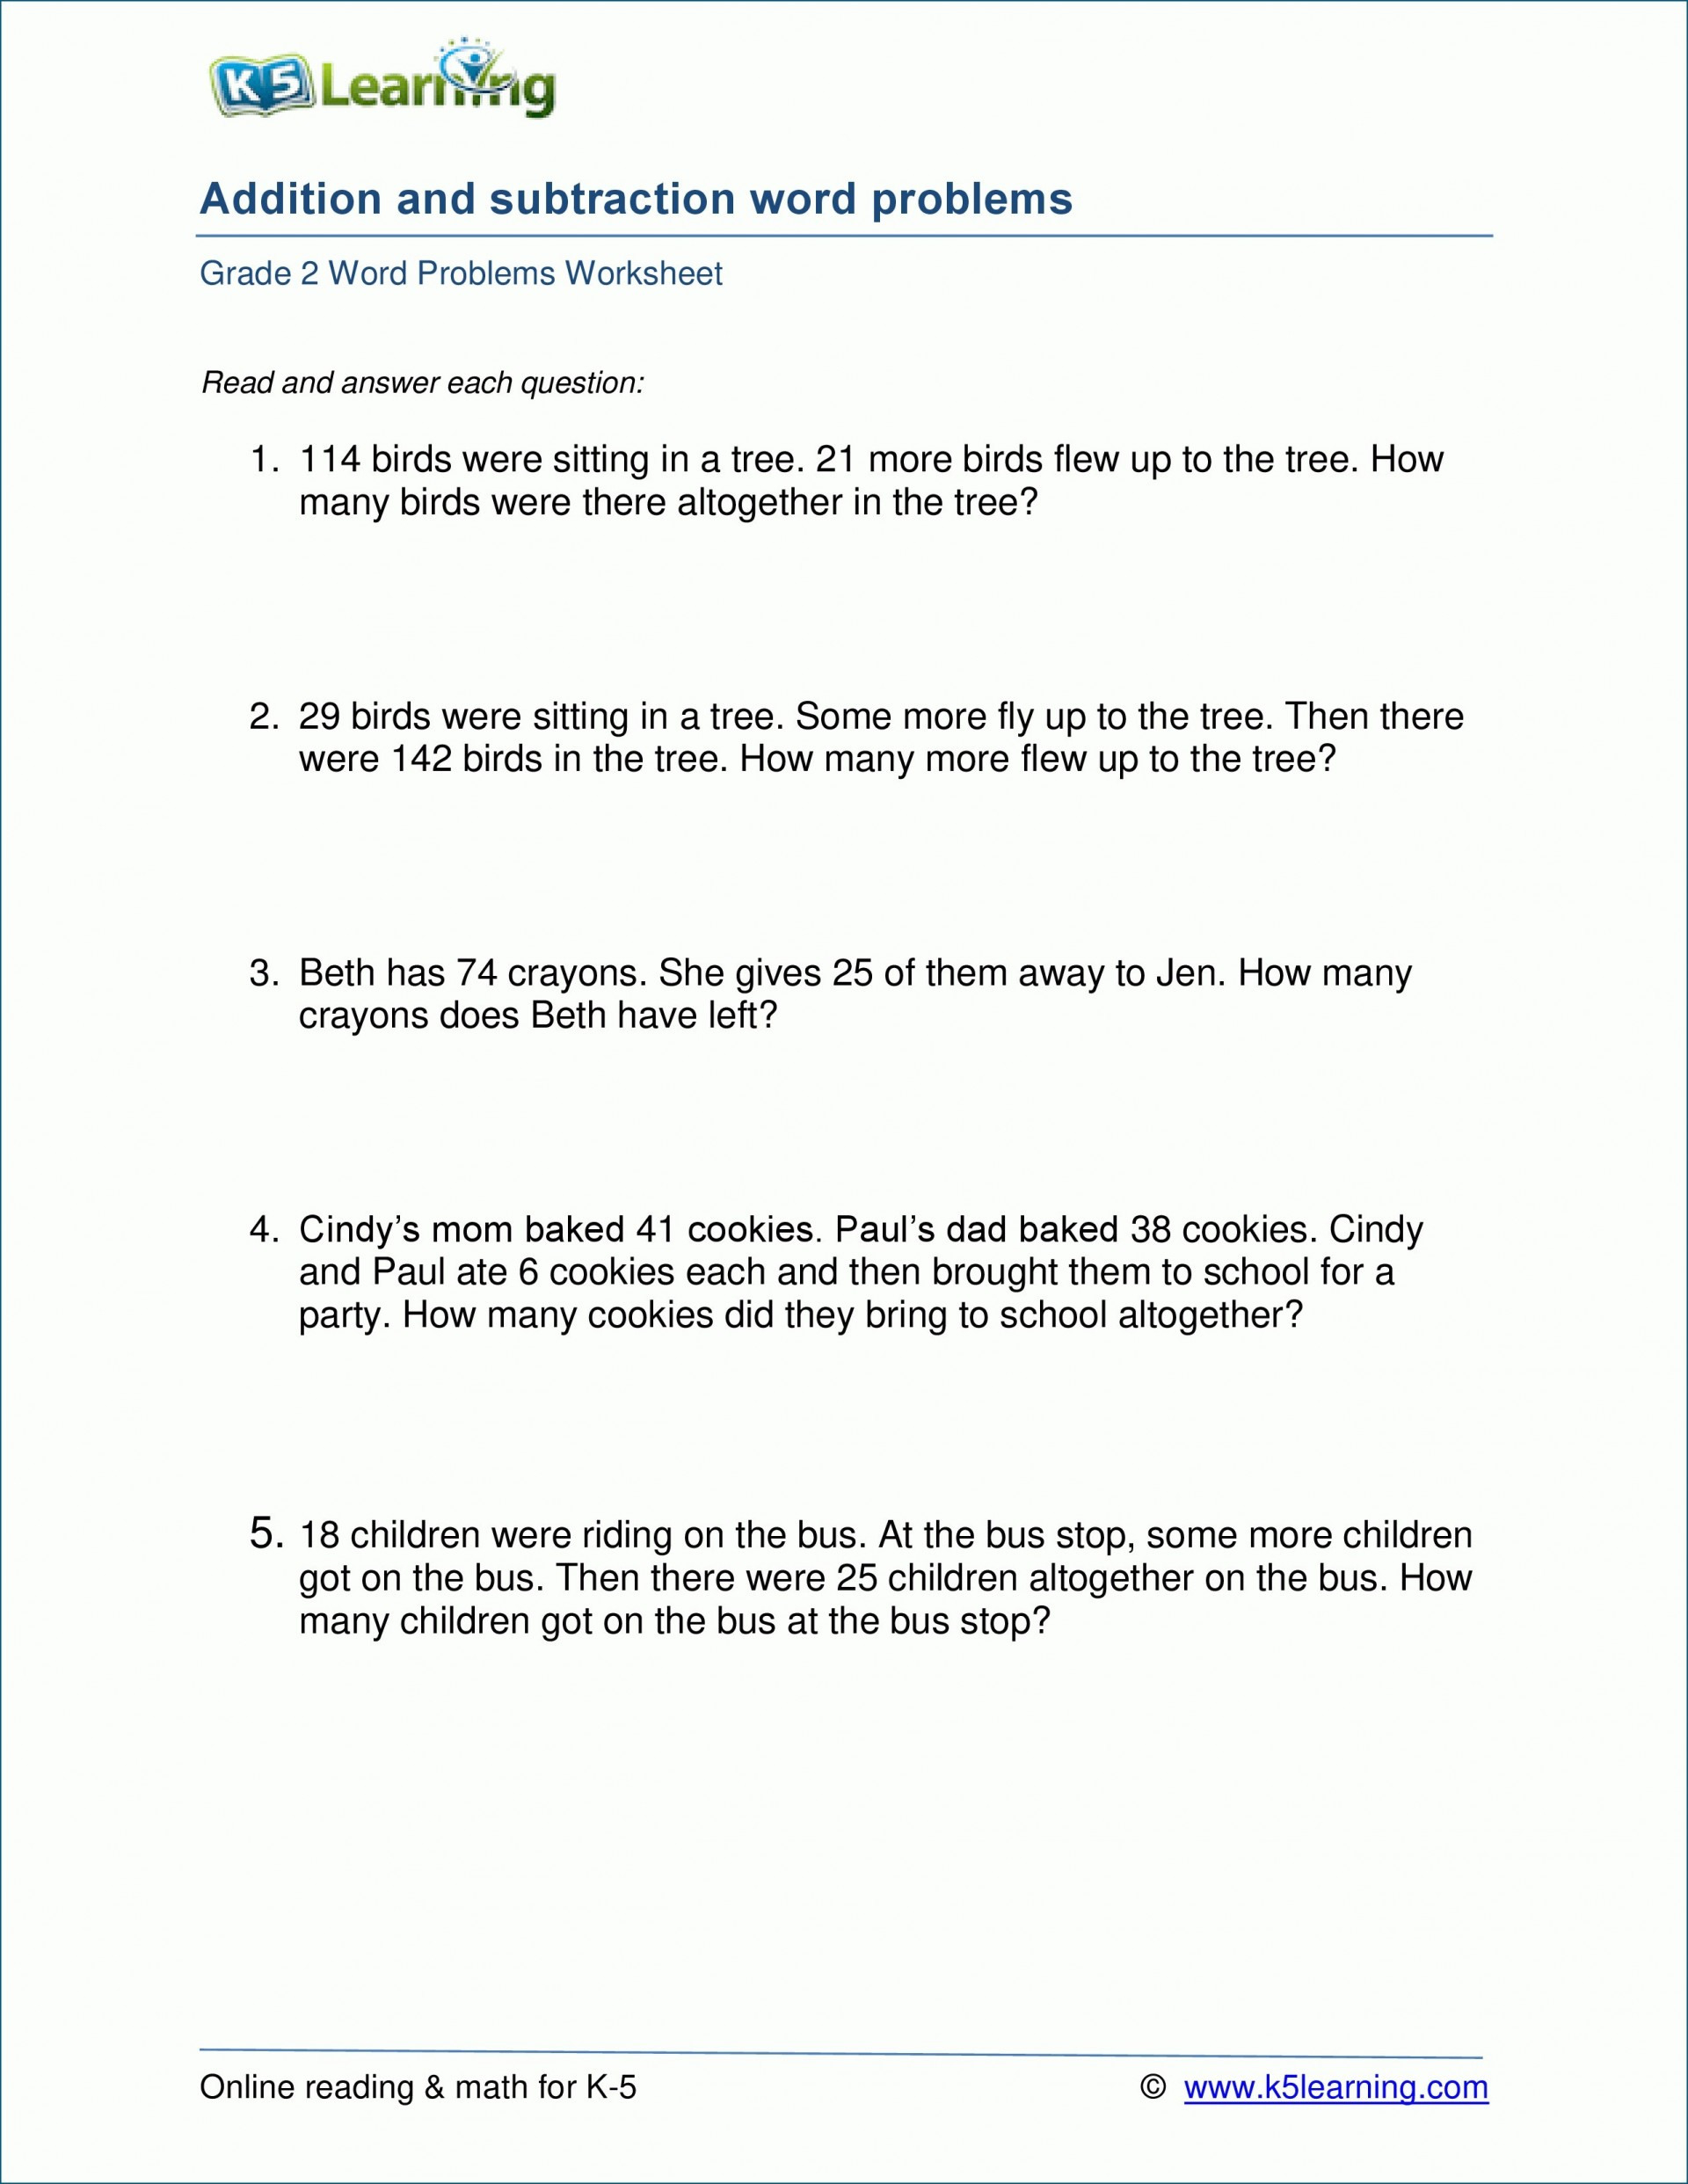 6th-grade-math-word-problems-worksheets-pdf-db-excel